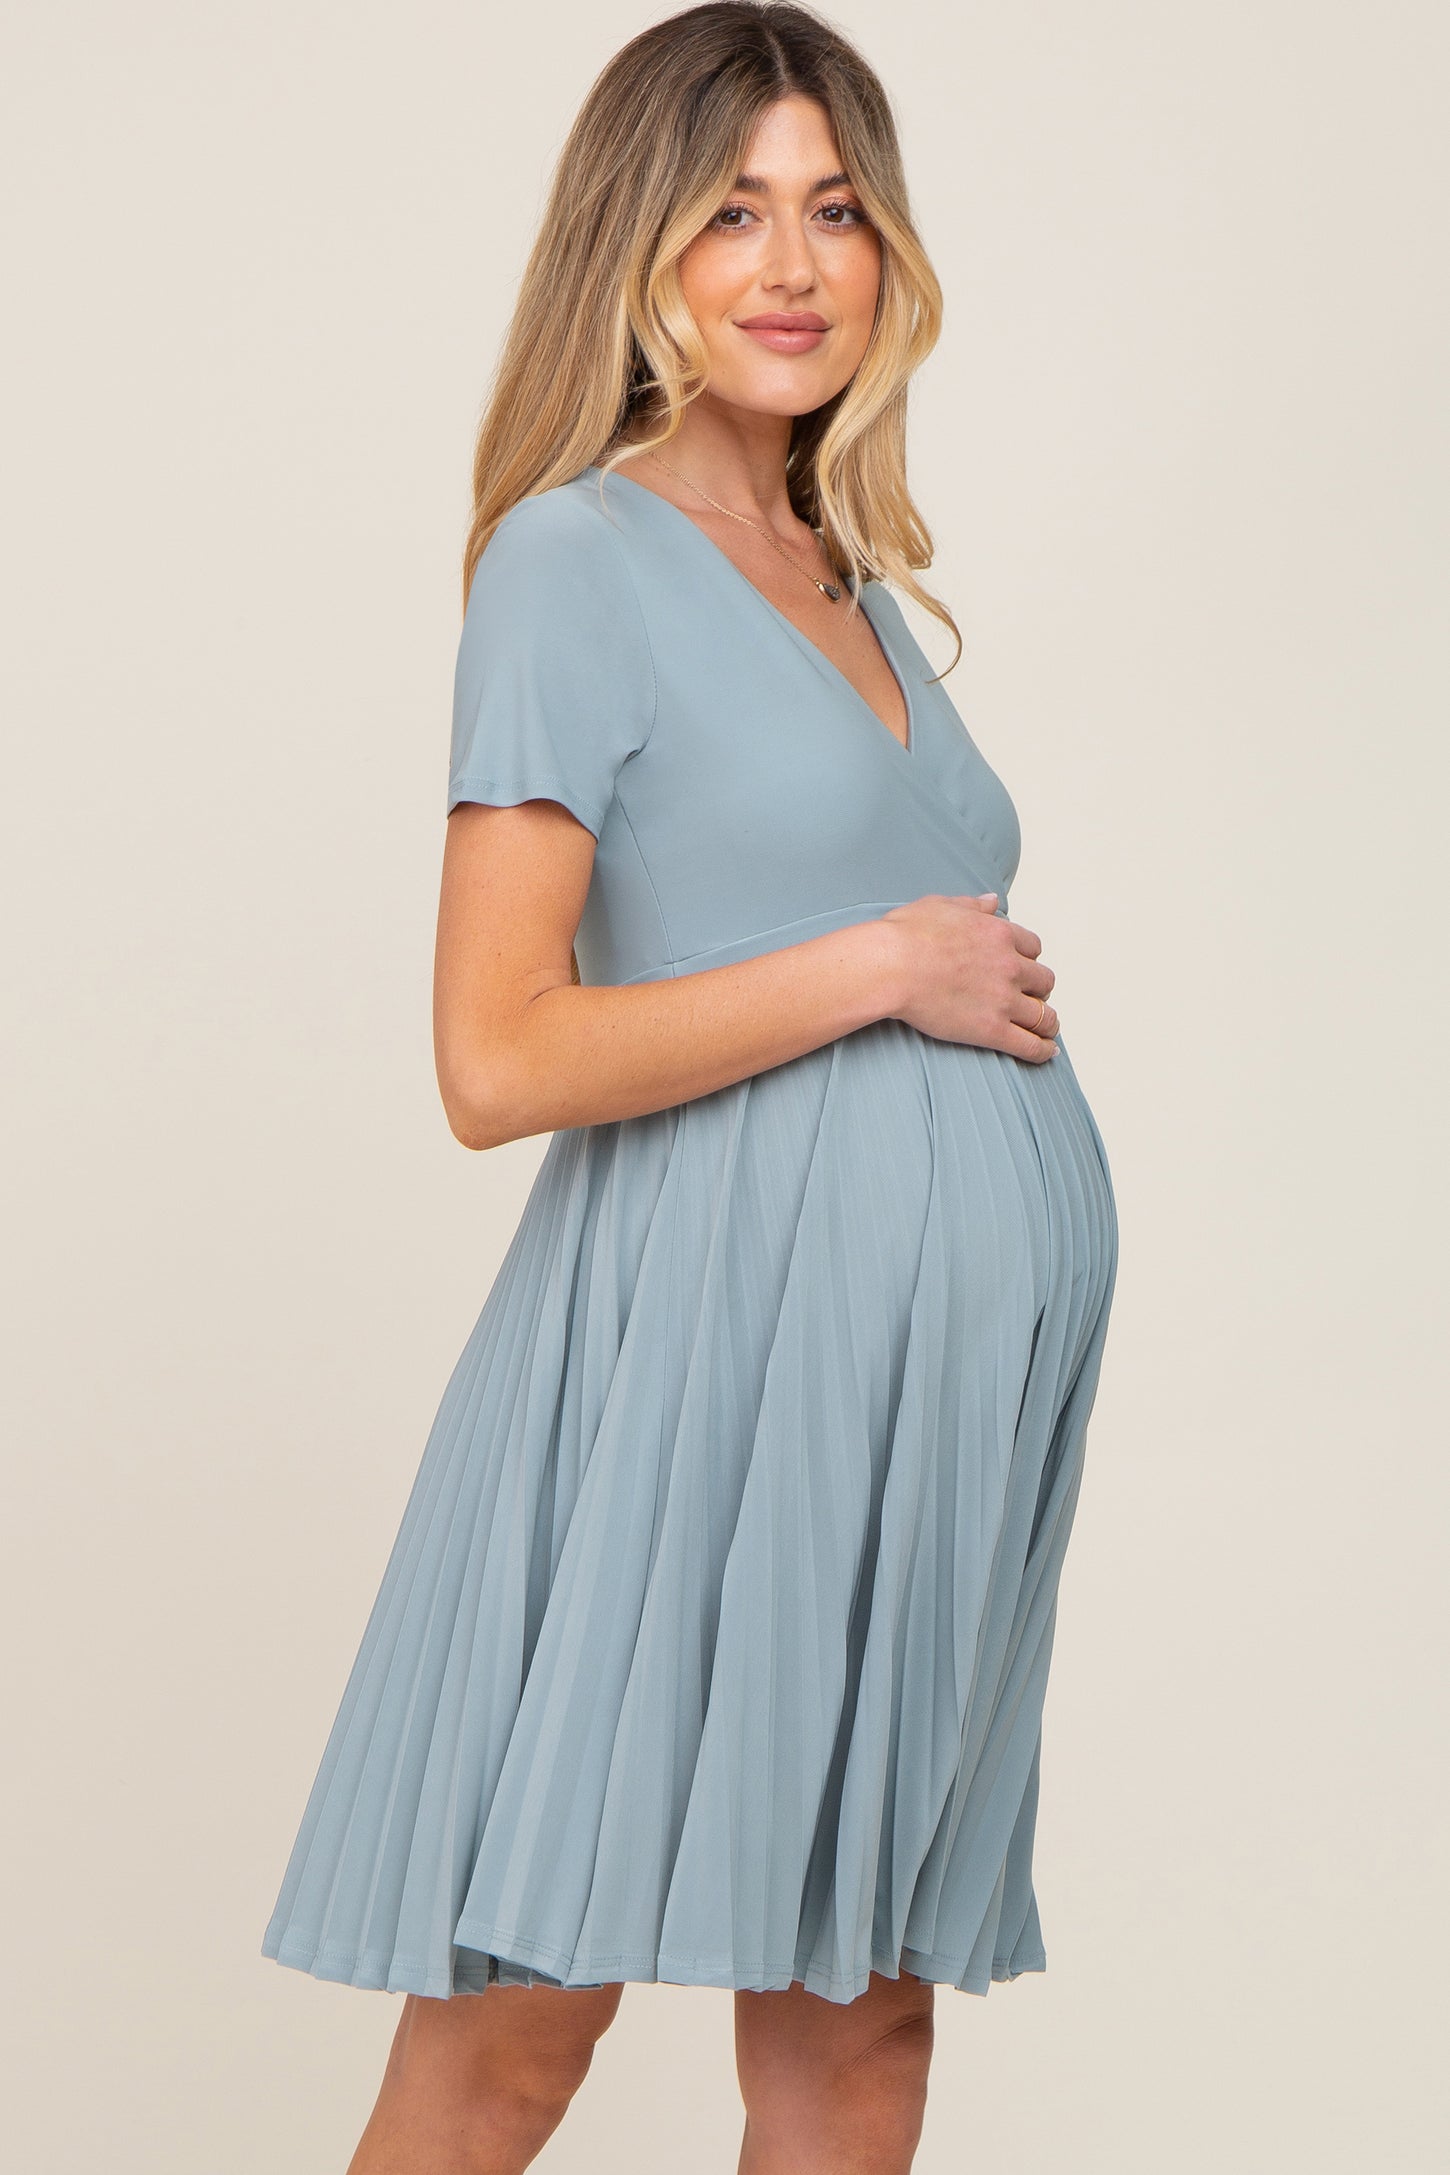 Mint Pleated Maternity/Nursing Dress